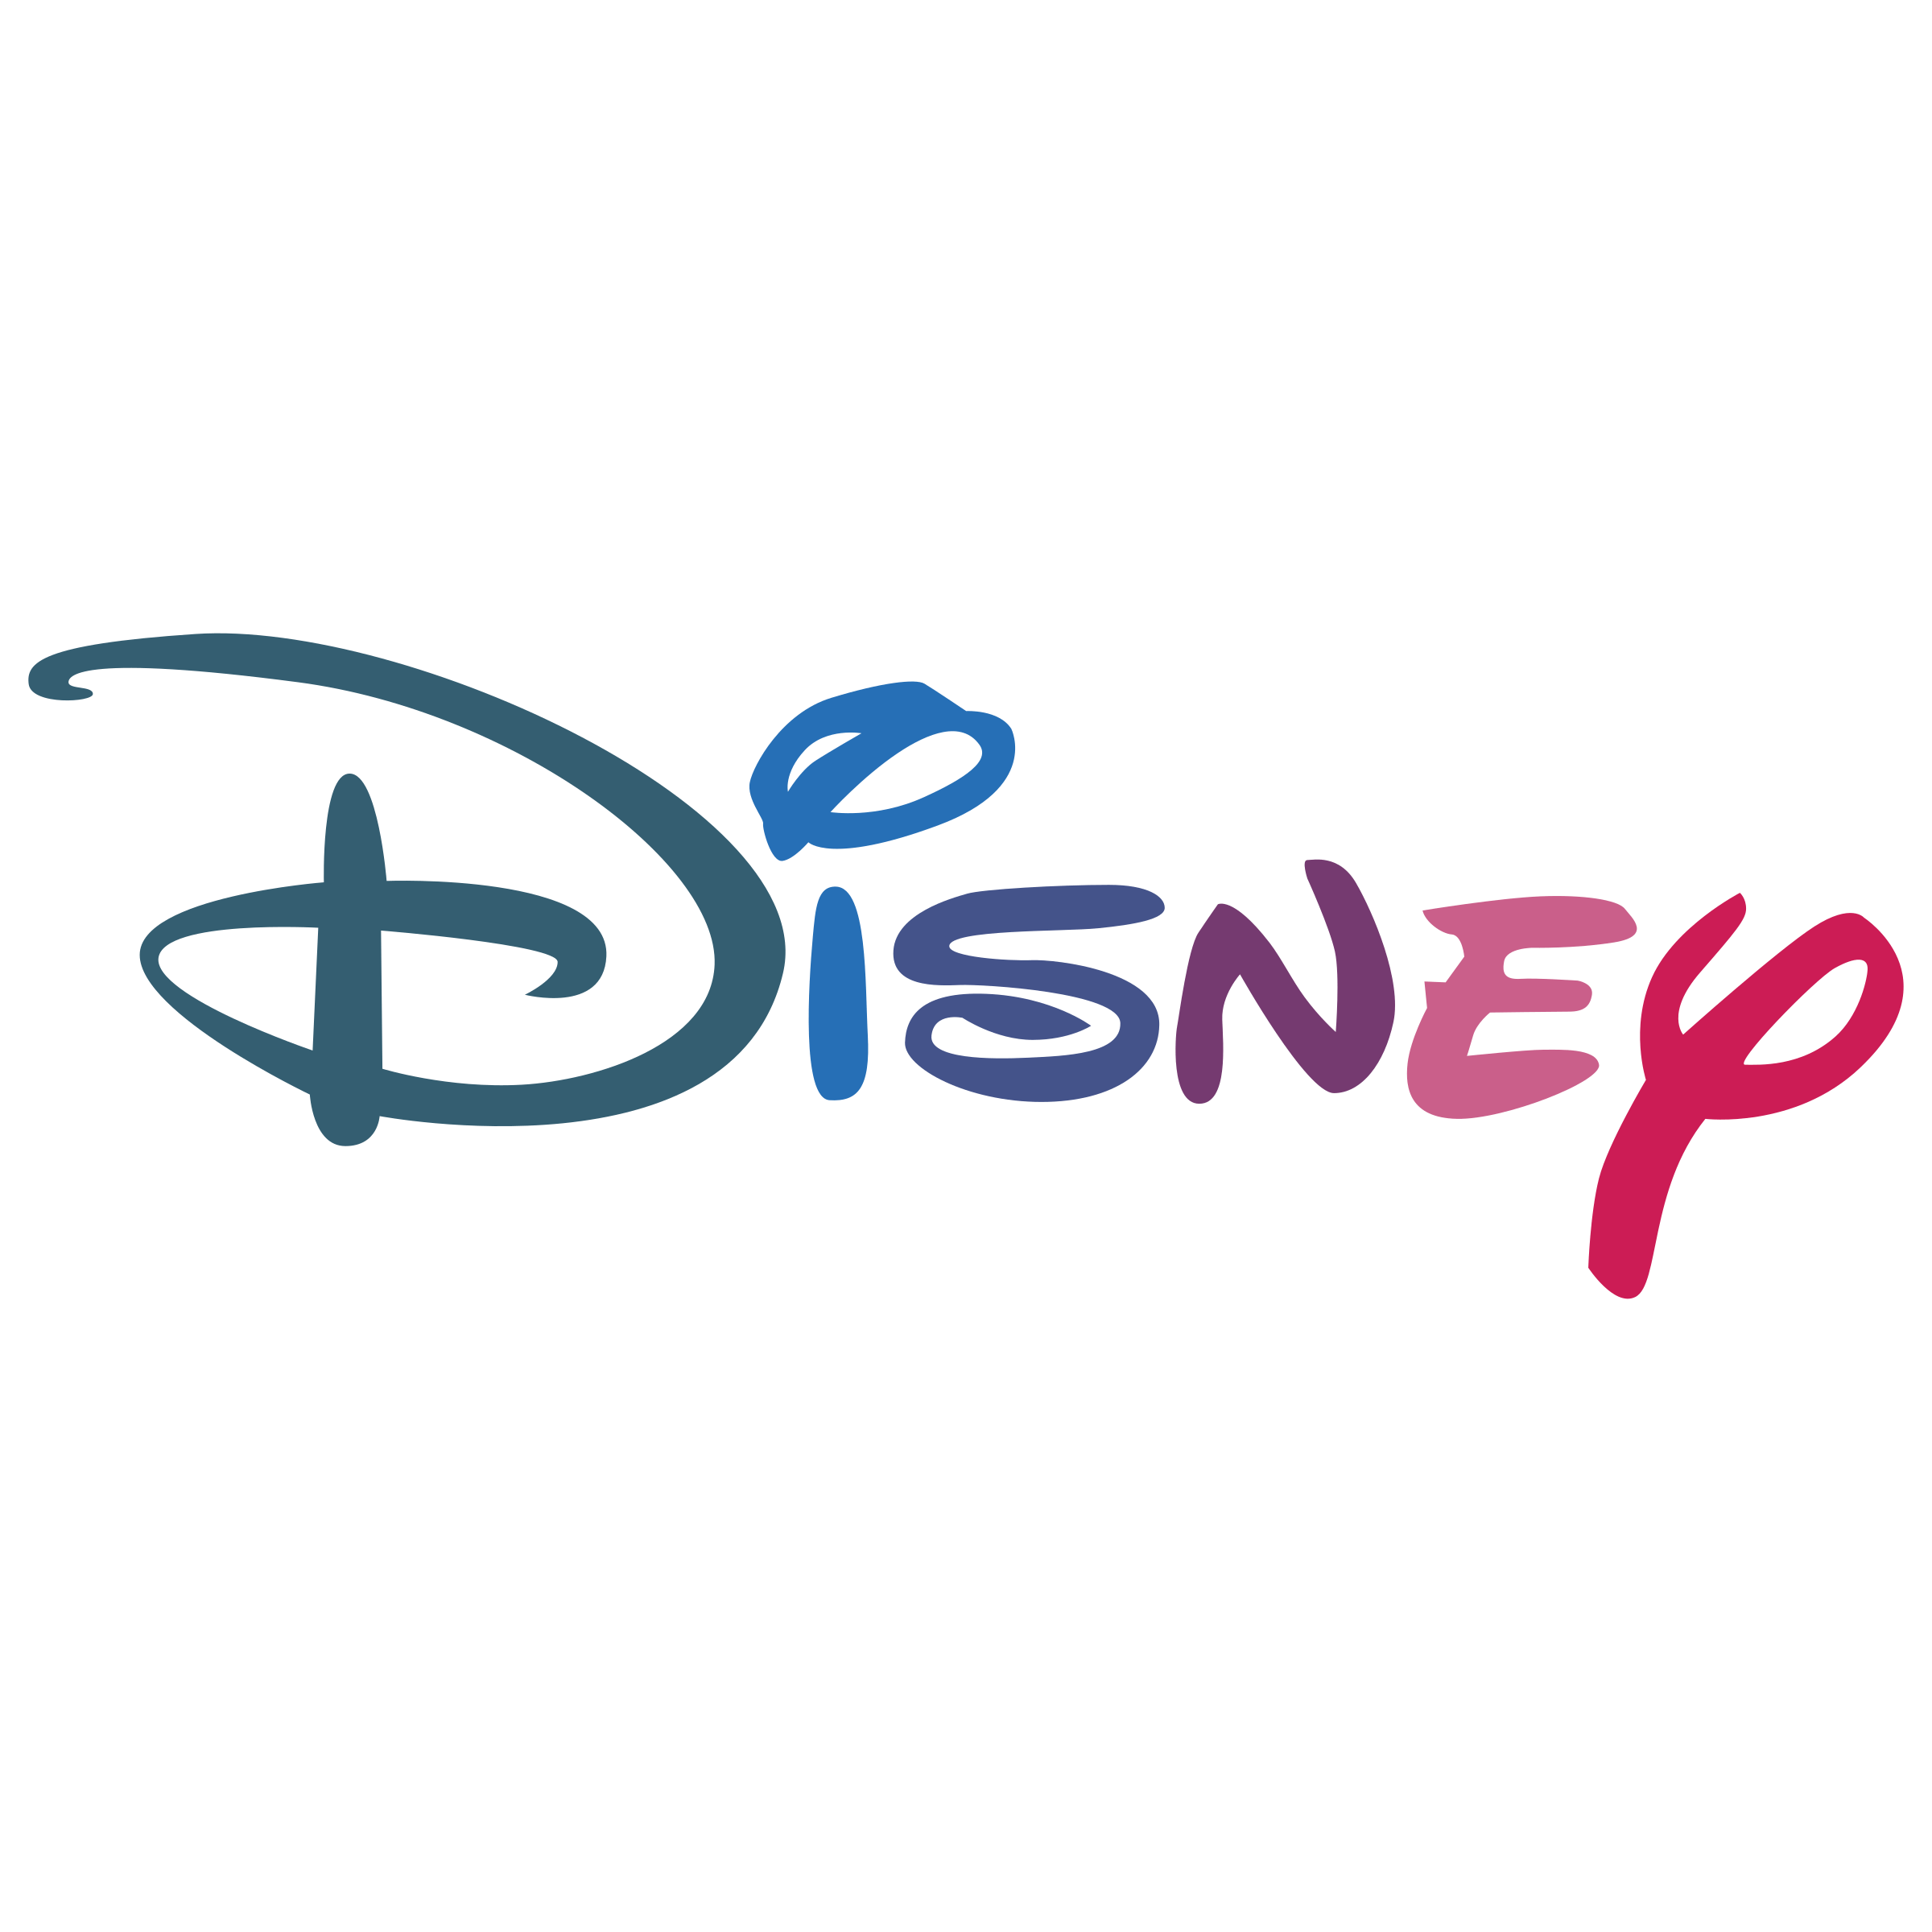 Walt Disney's Logo - Walt Disney logo PNG images free download